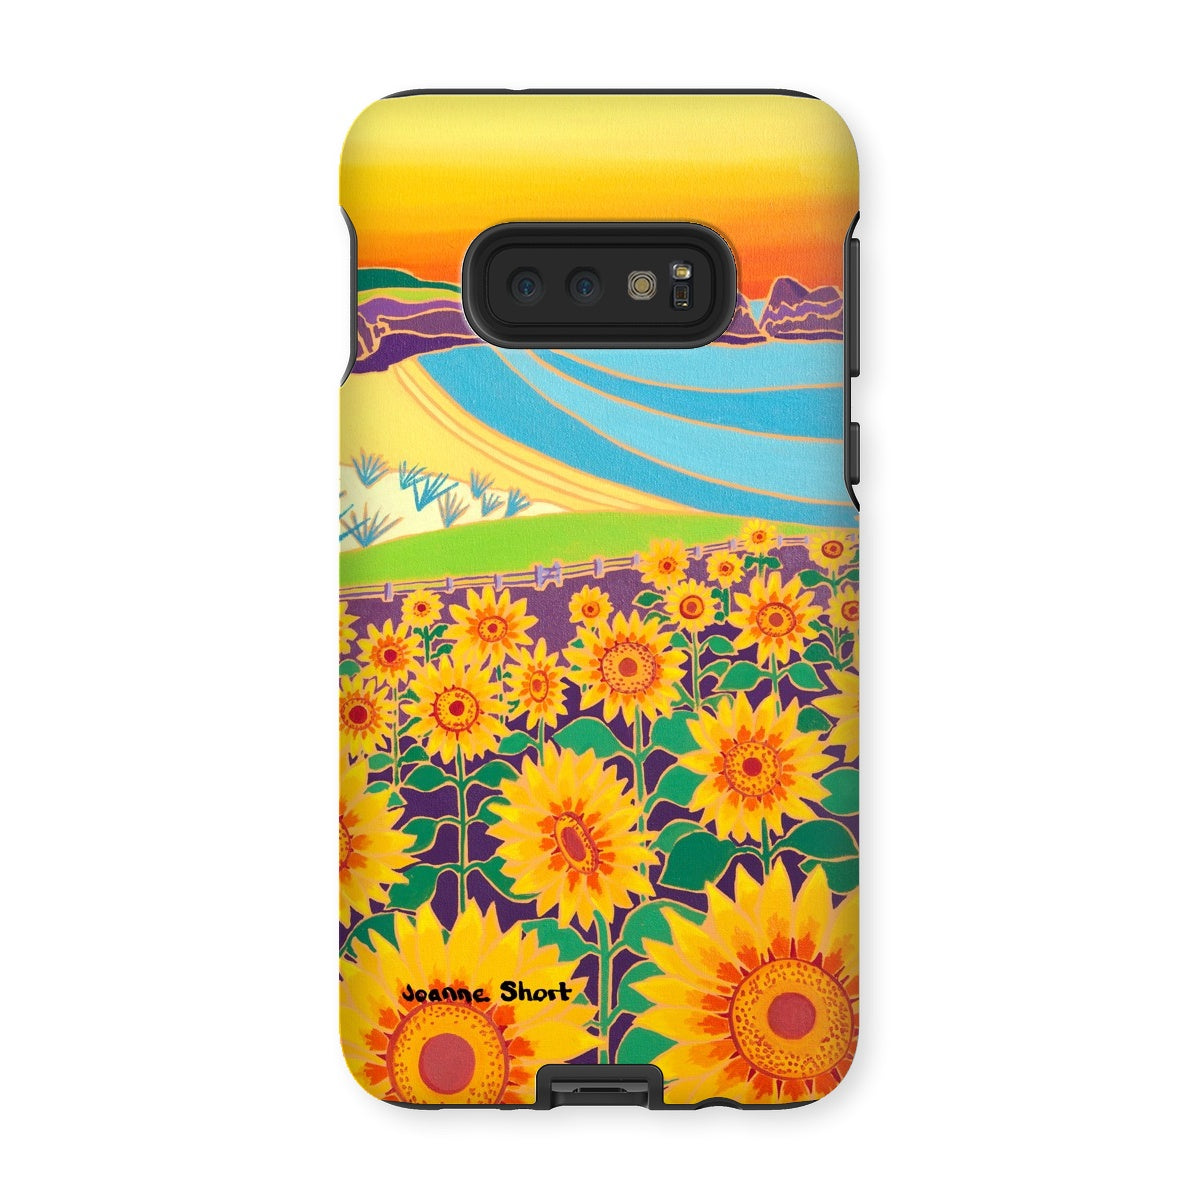 Tough Art Phone Case. Sunflowers, Holywell Bay Sunset. Artist Joanne Short. Cornwall Art Gallery